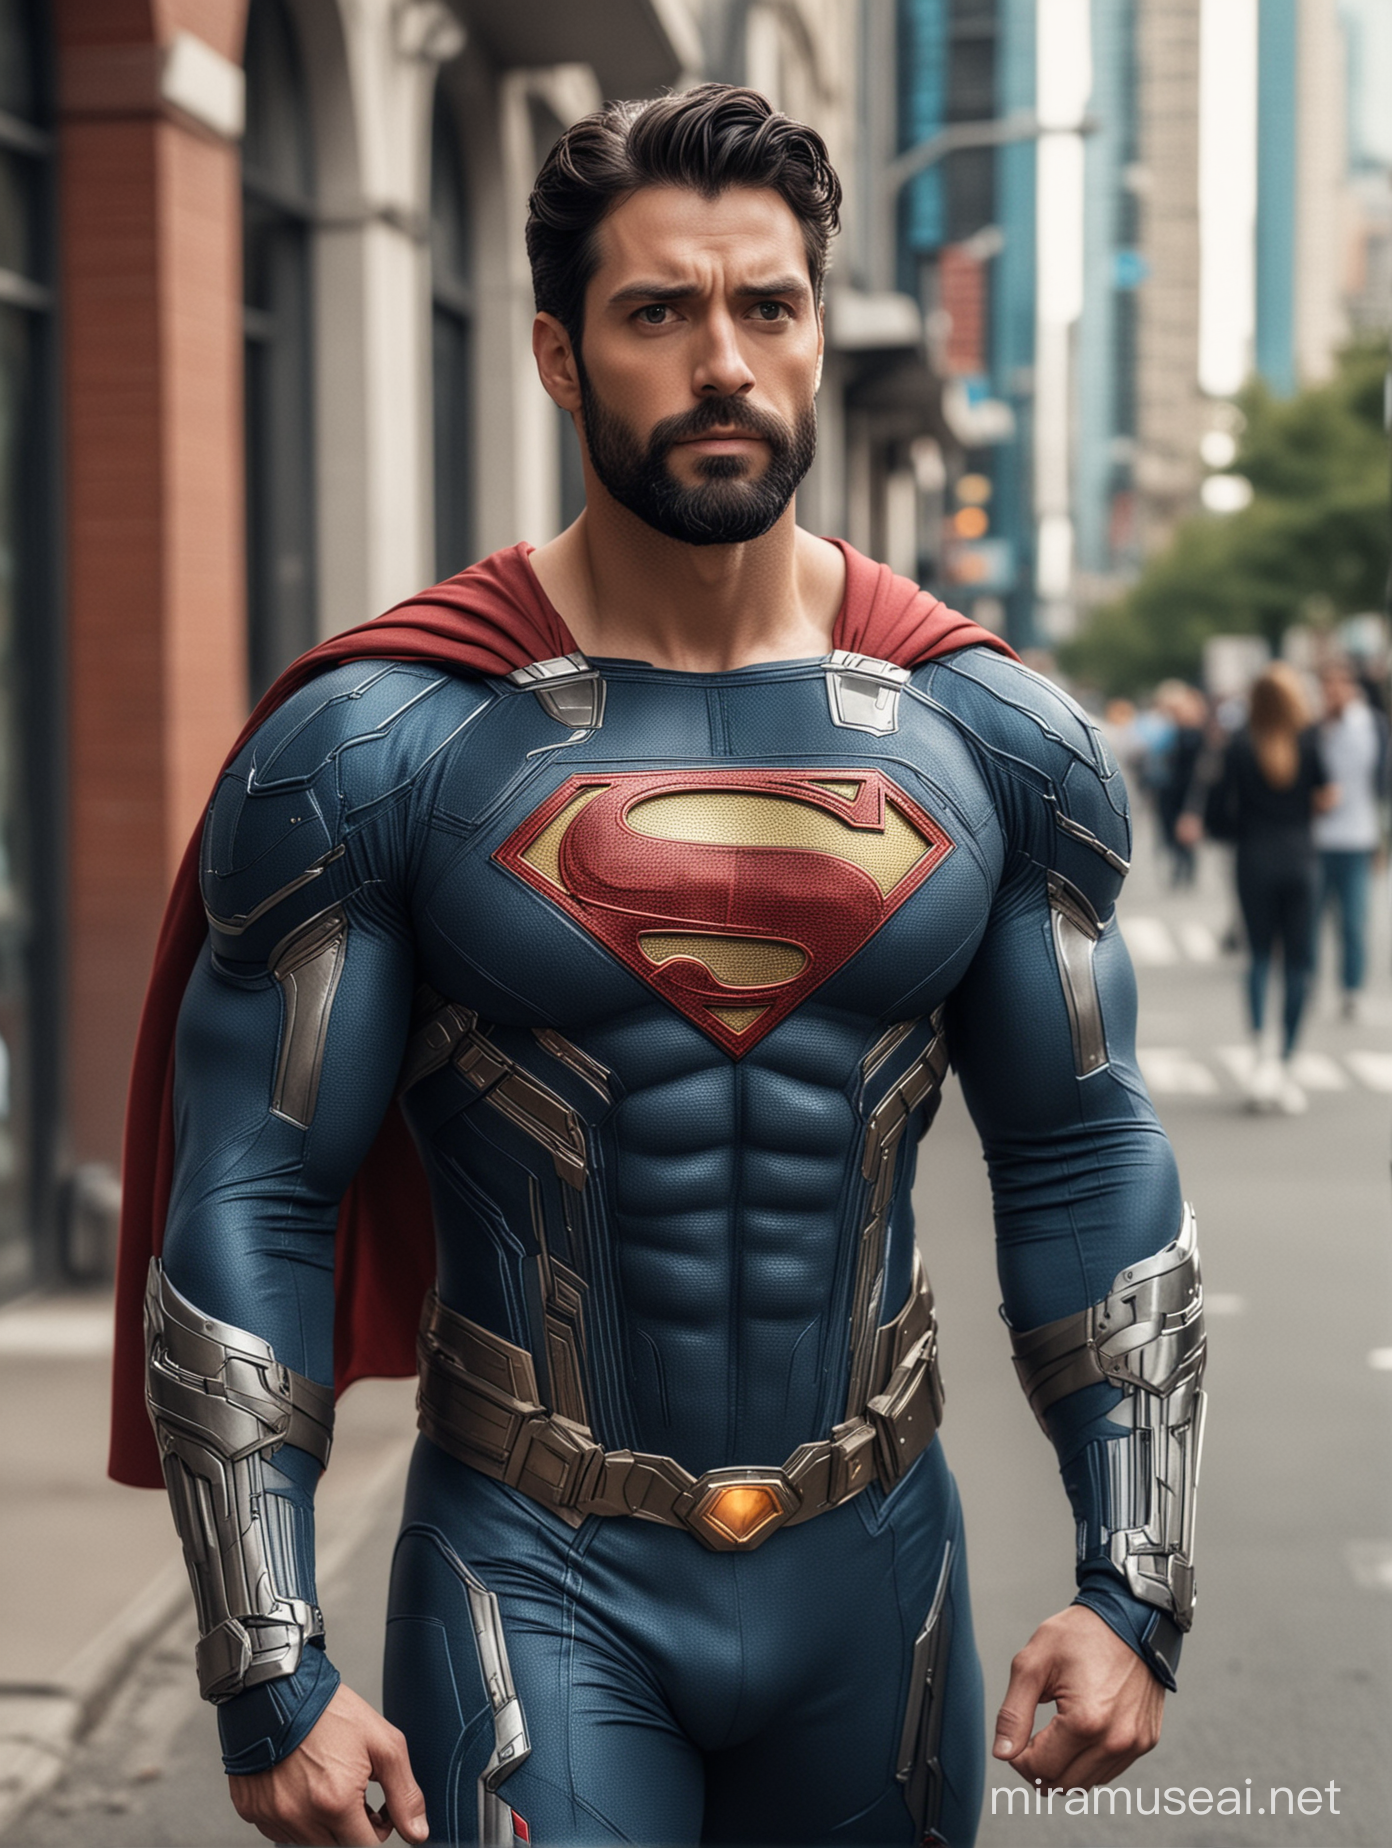 Muscular Superman in SciFi High Tech Armor Suit Strides Down Urban Street